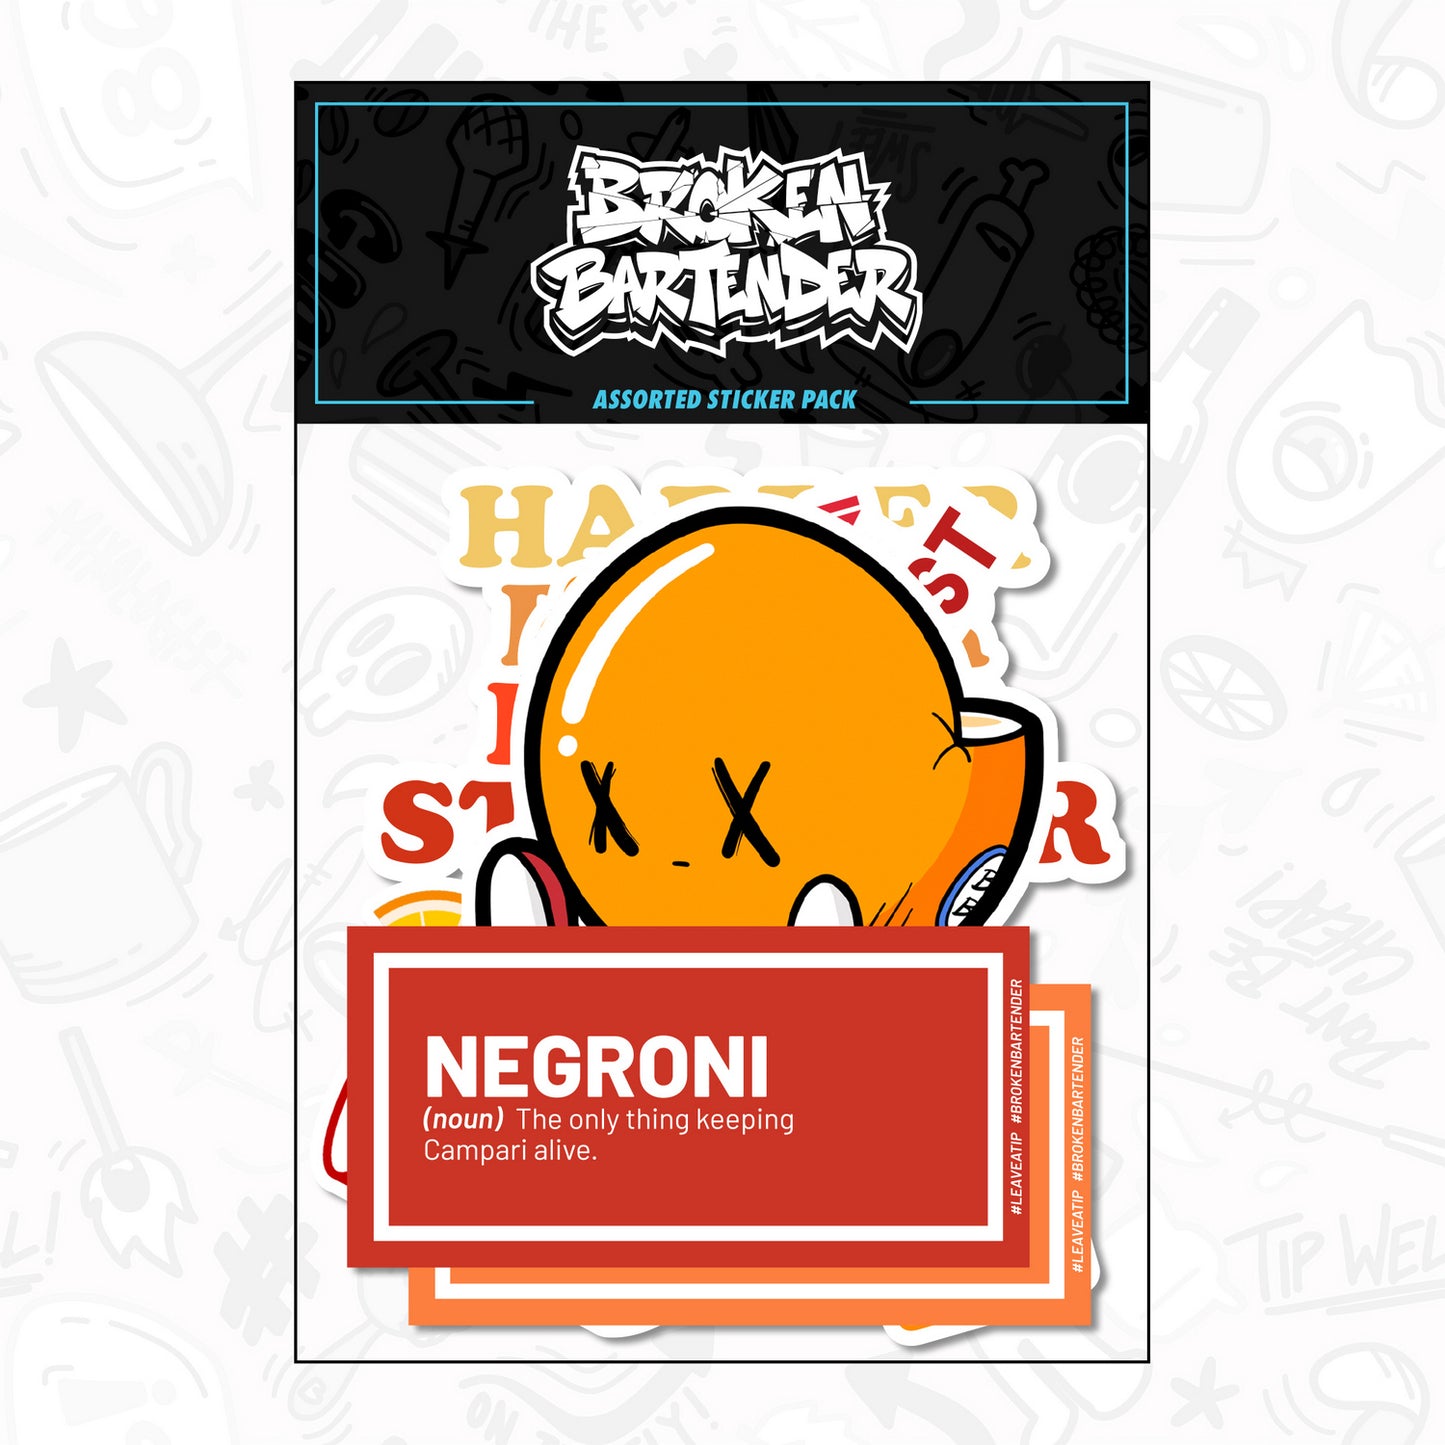 Negroni Sticker Pack by Broken Bartender